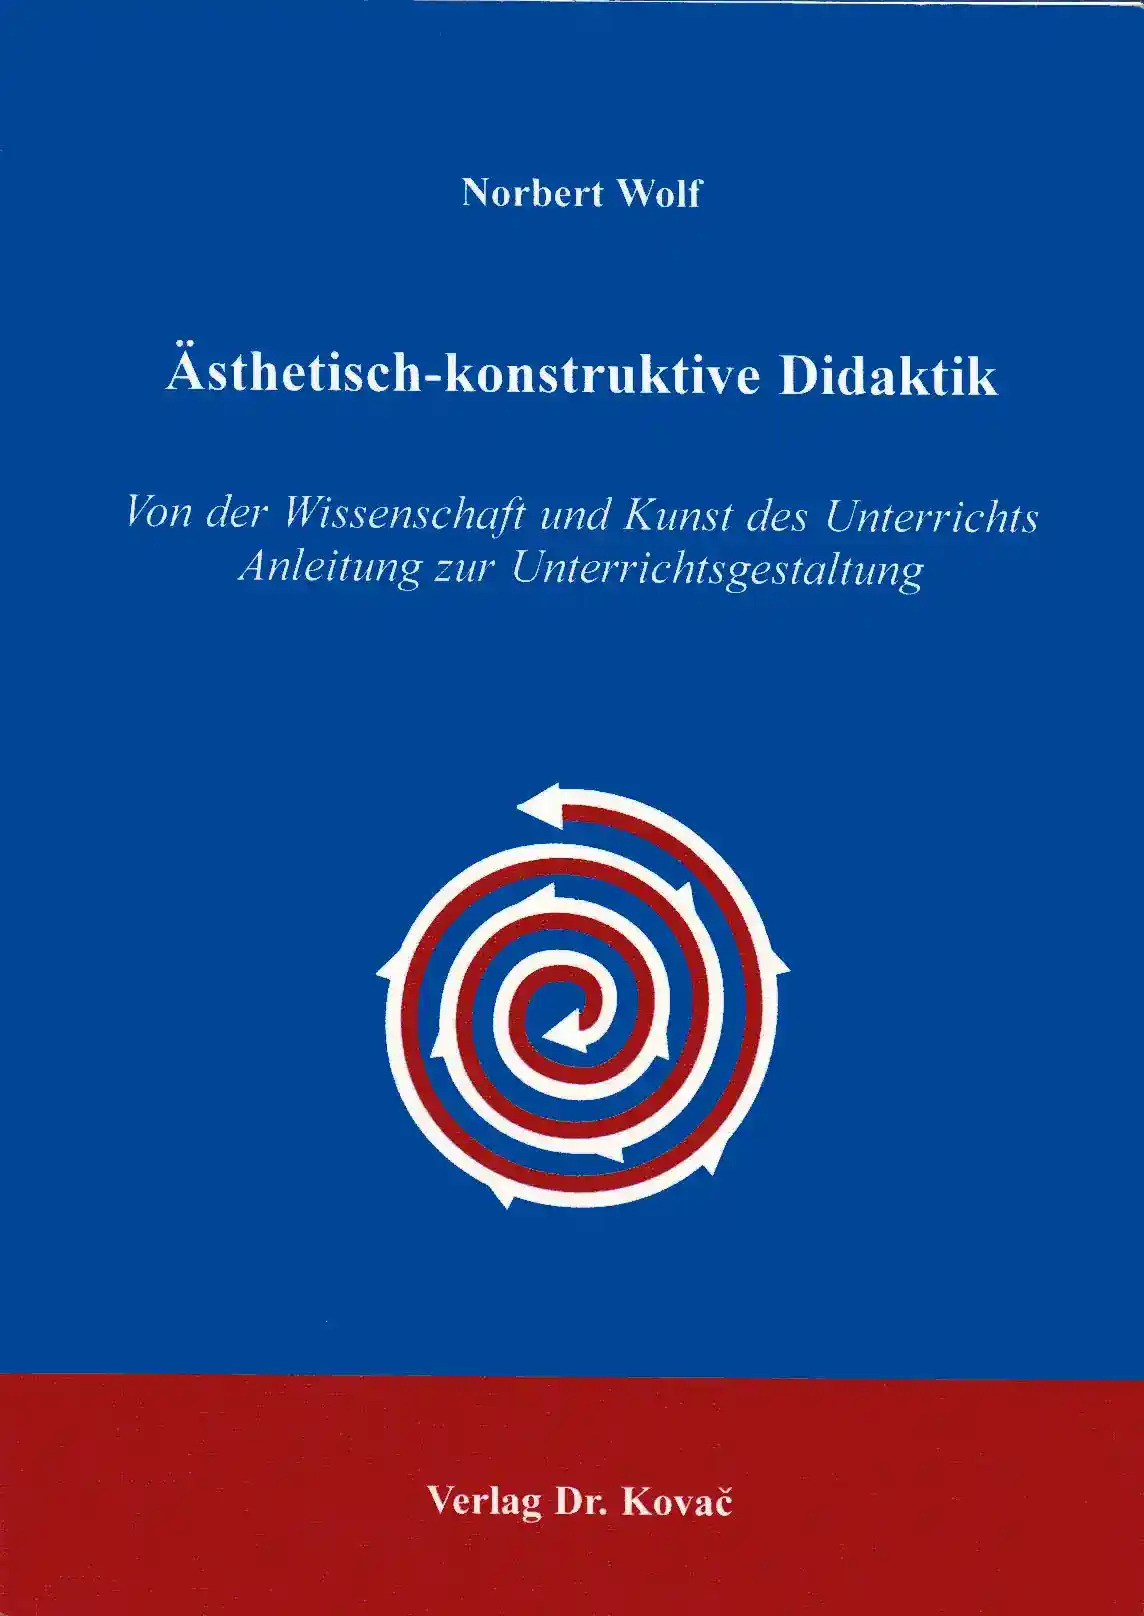 Ästhetisch-konstruktive Didaktik (Forschungsarbeit)